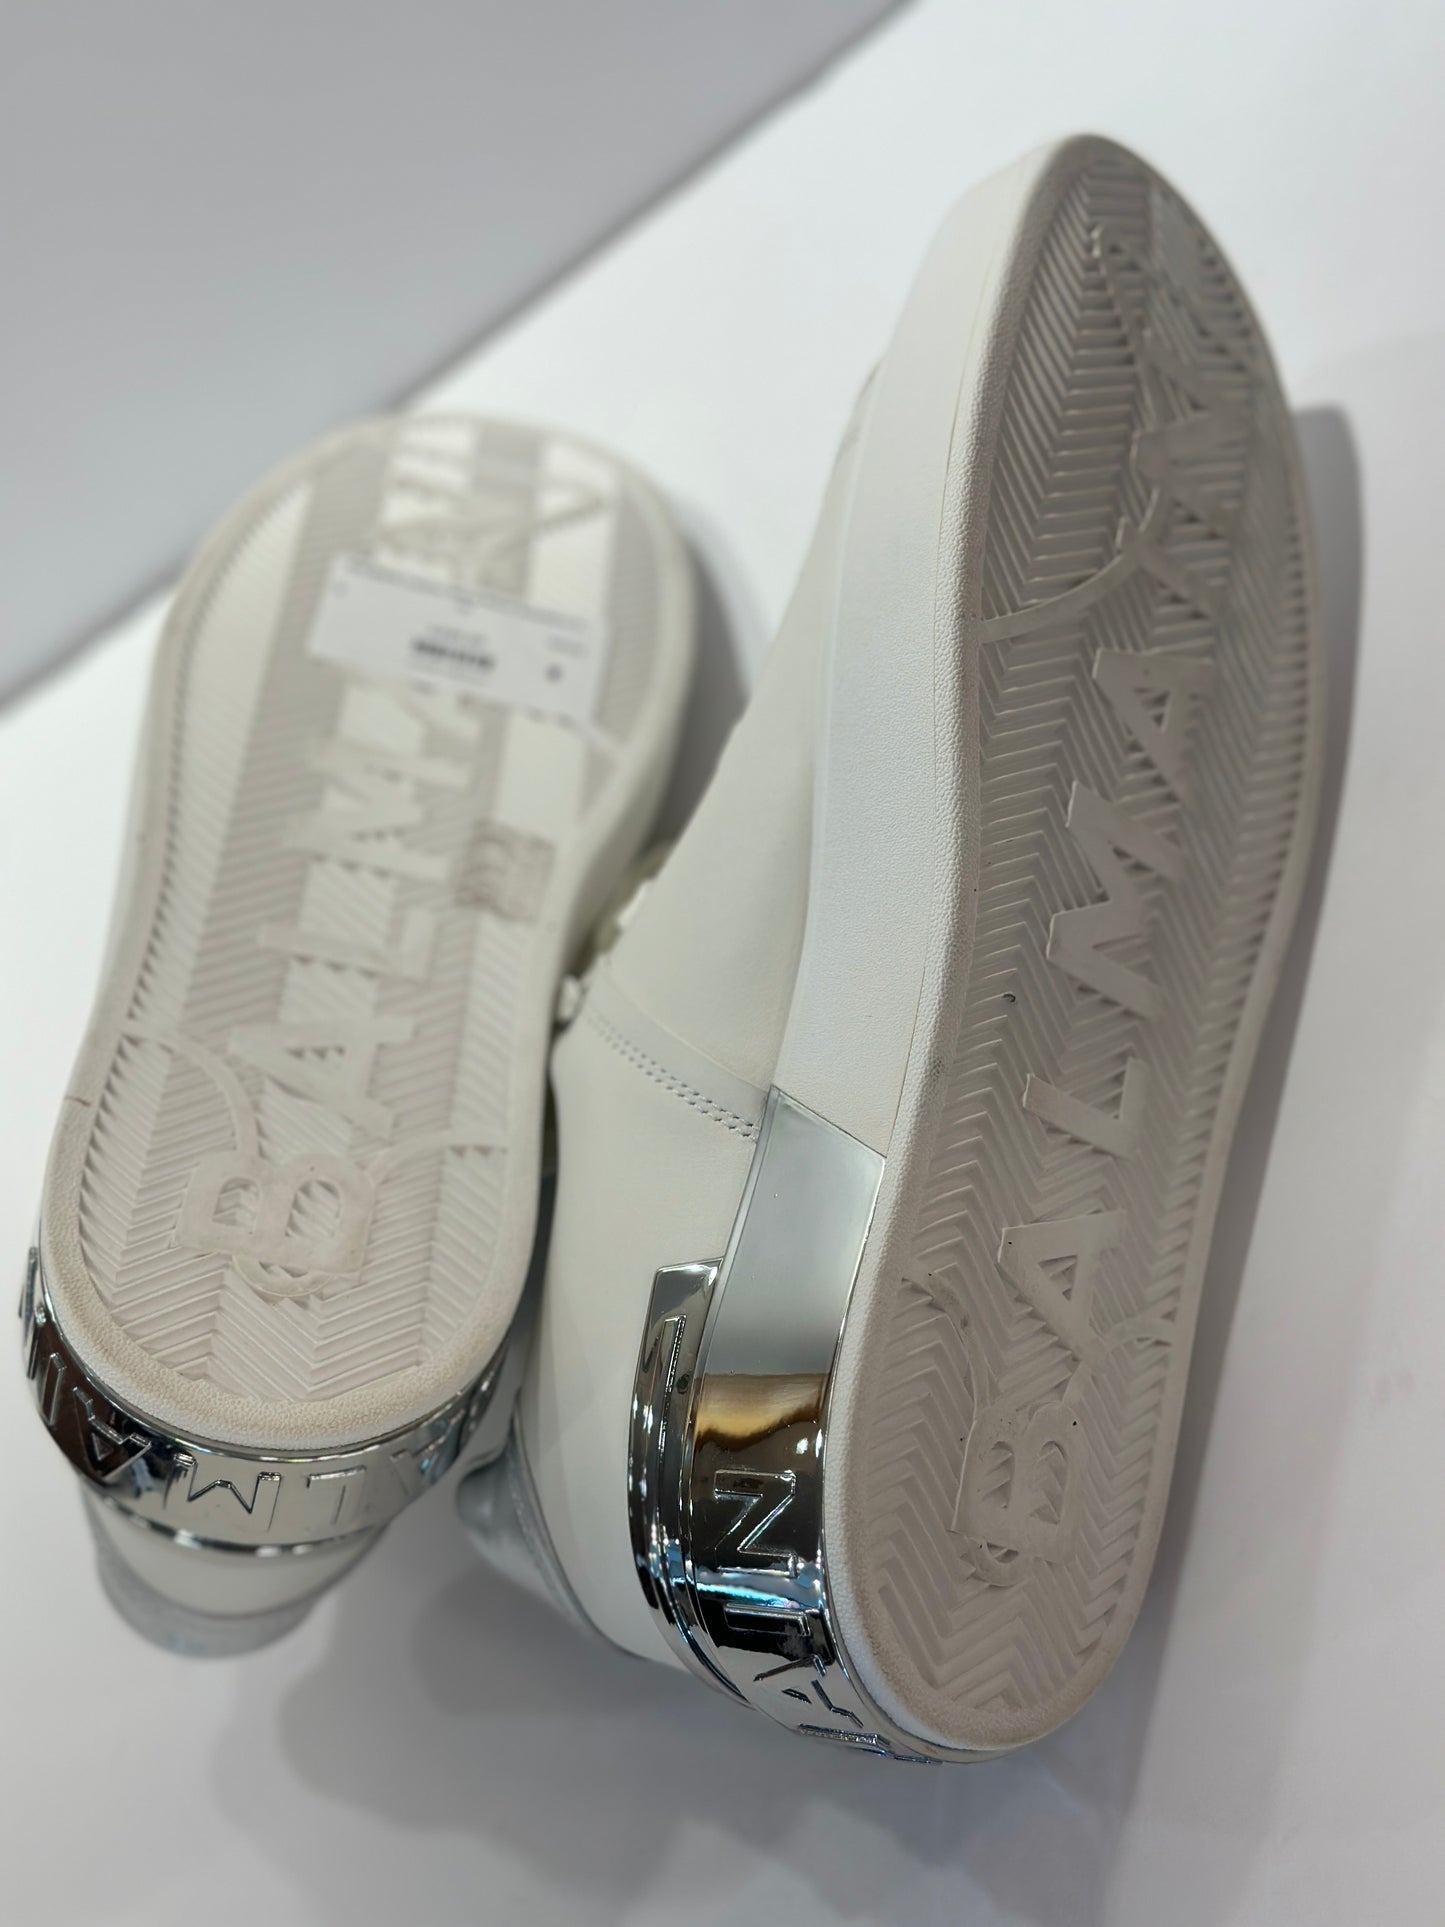 BALMAIN Leather White Silver Sneakers/ US9-39